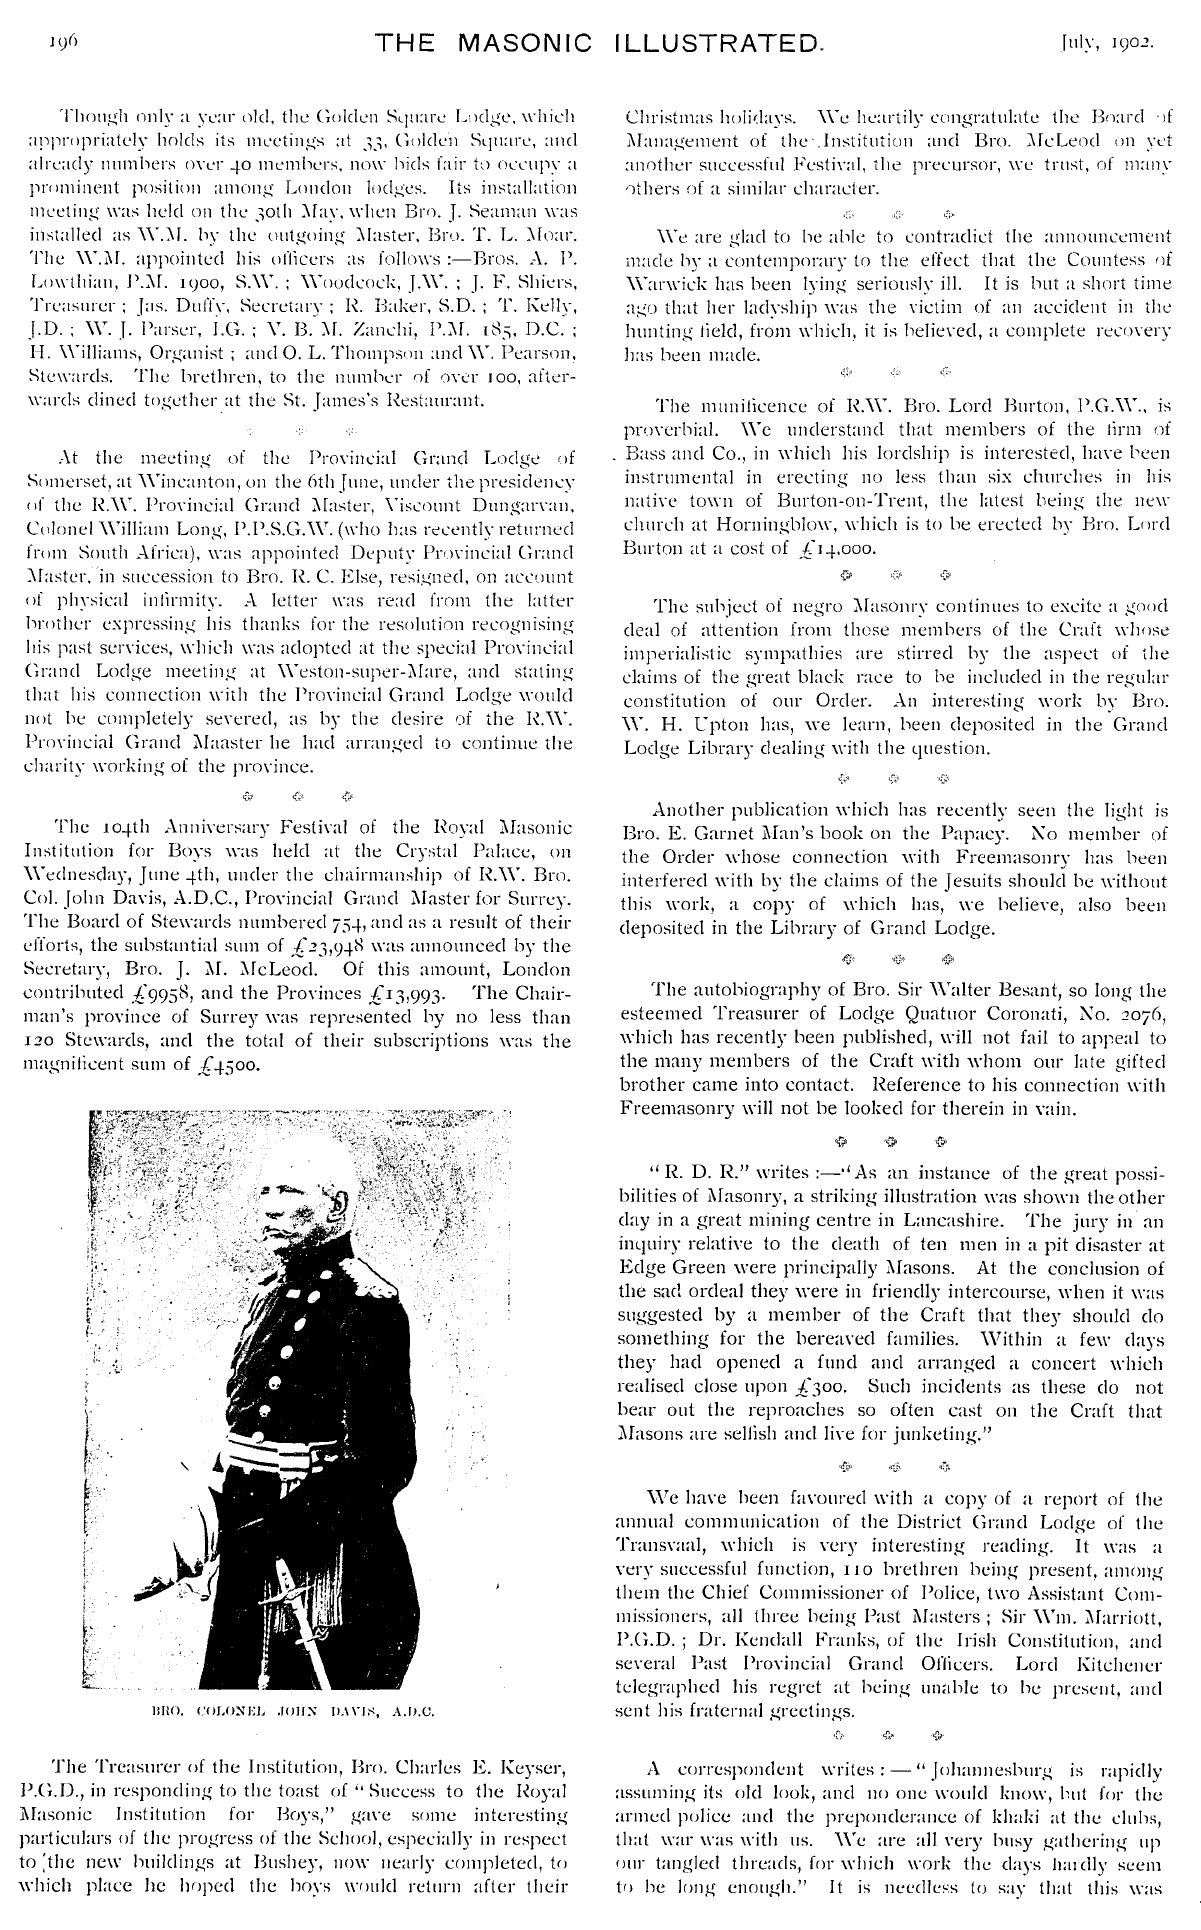 The Masonic Illustrated: 1902-07-01: 12